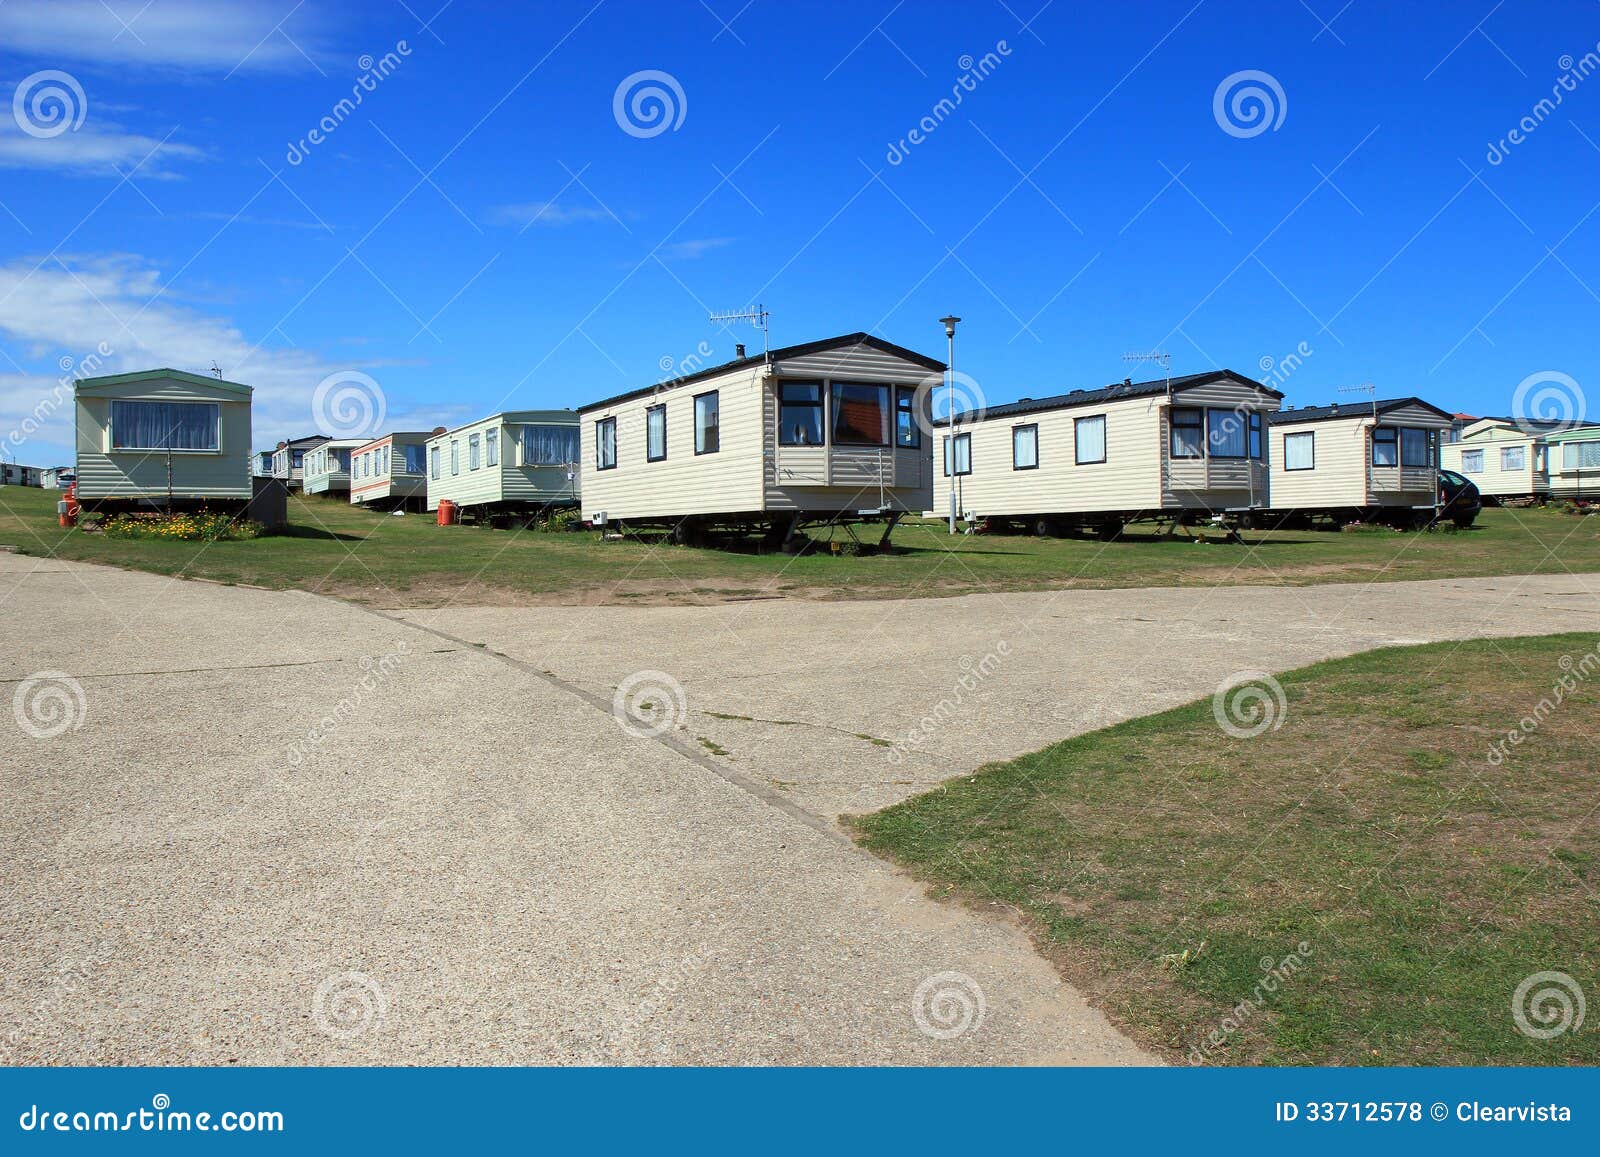 trailer or caravan park.